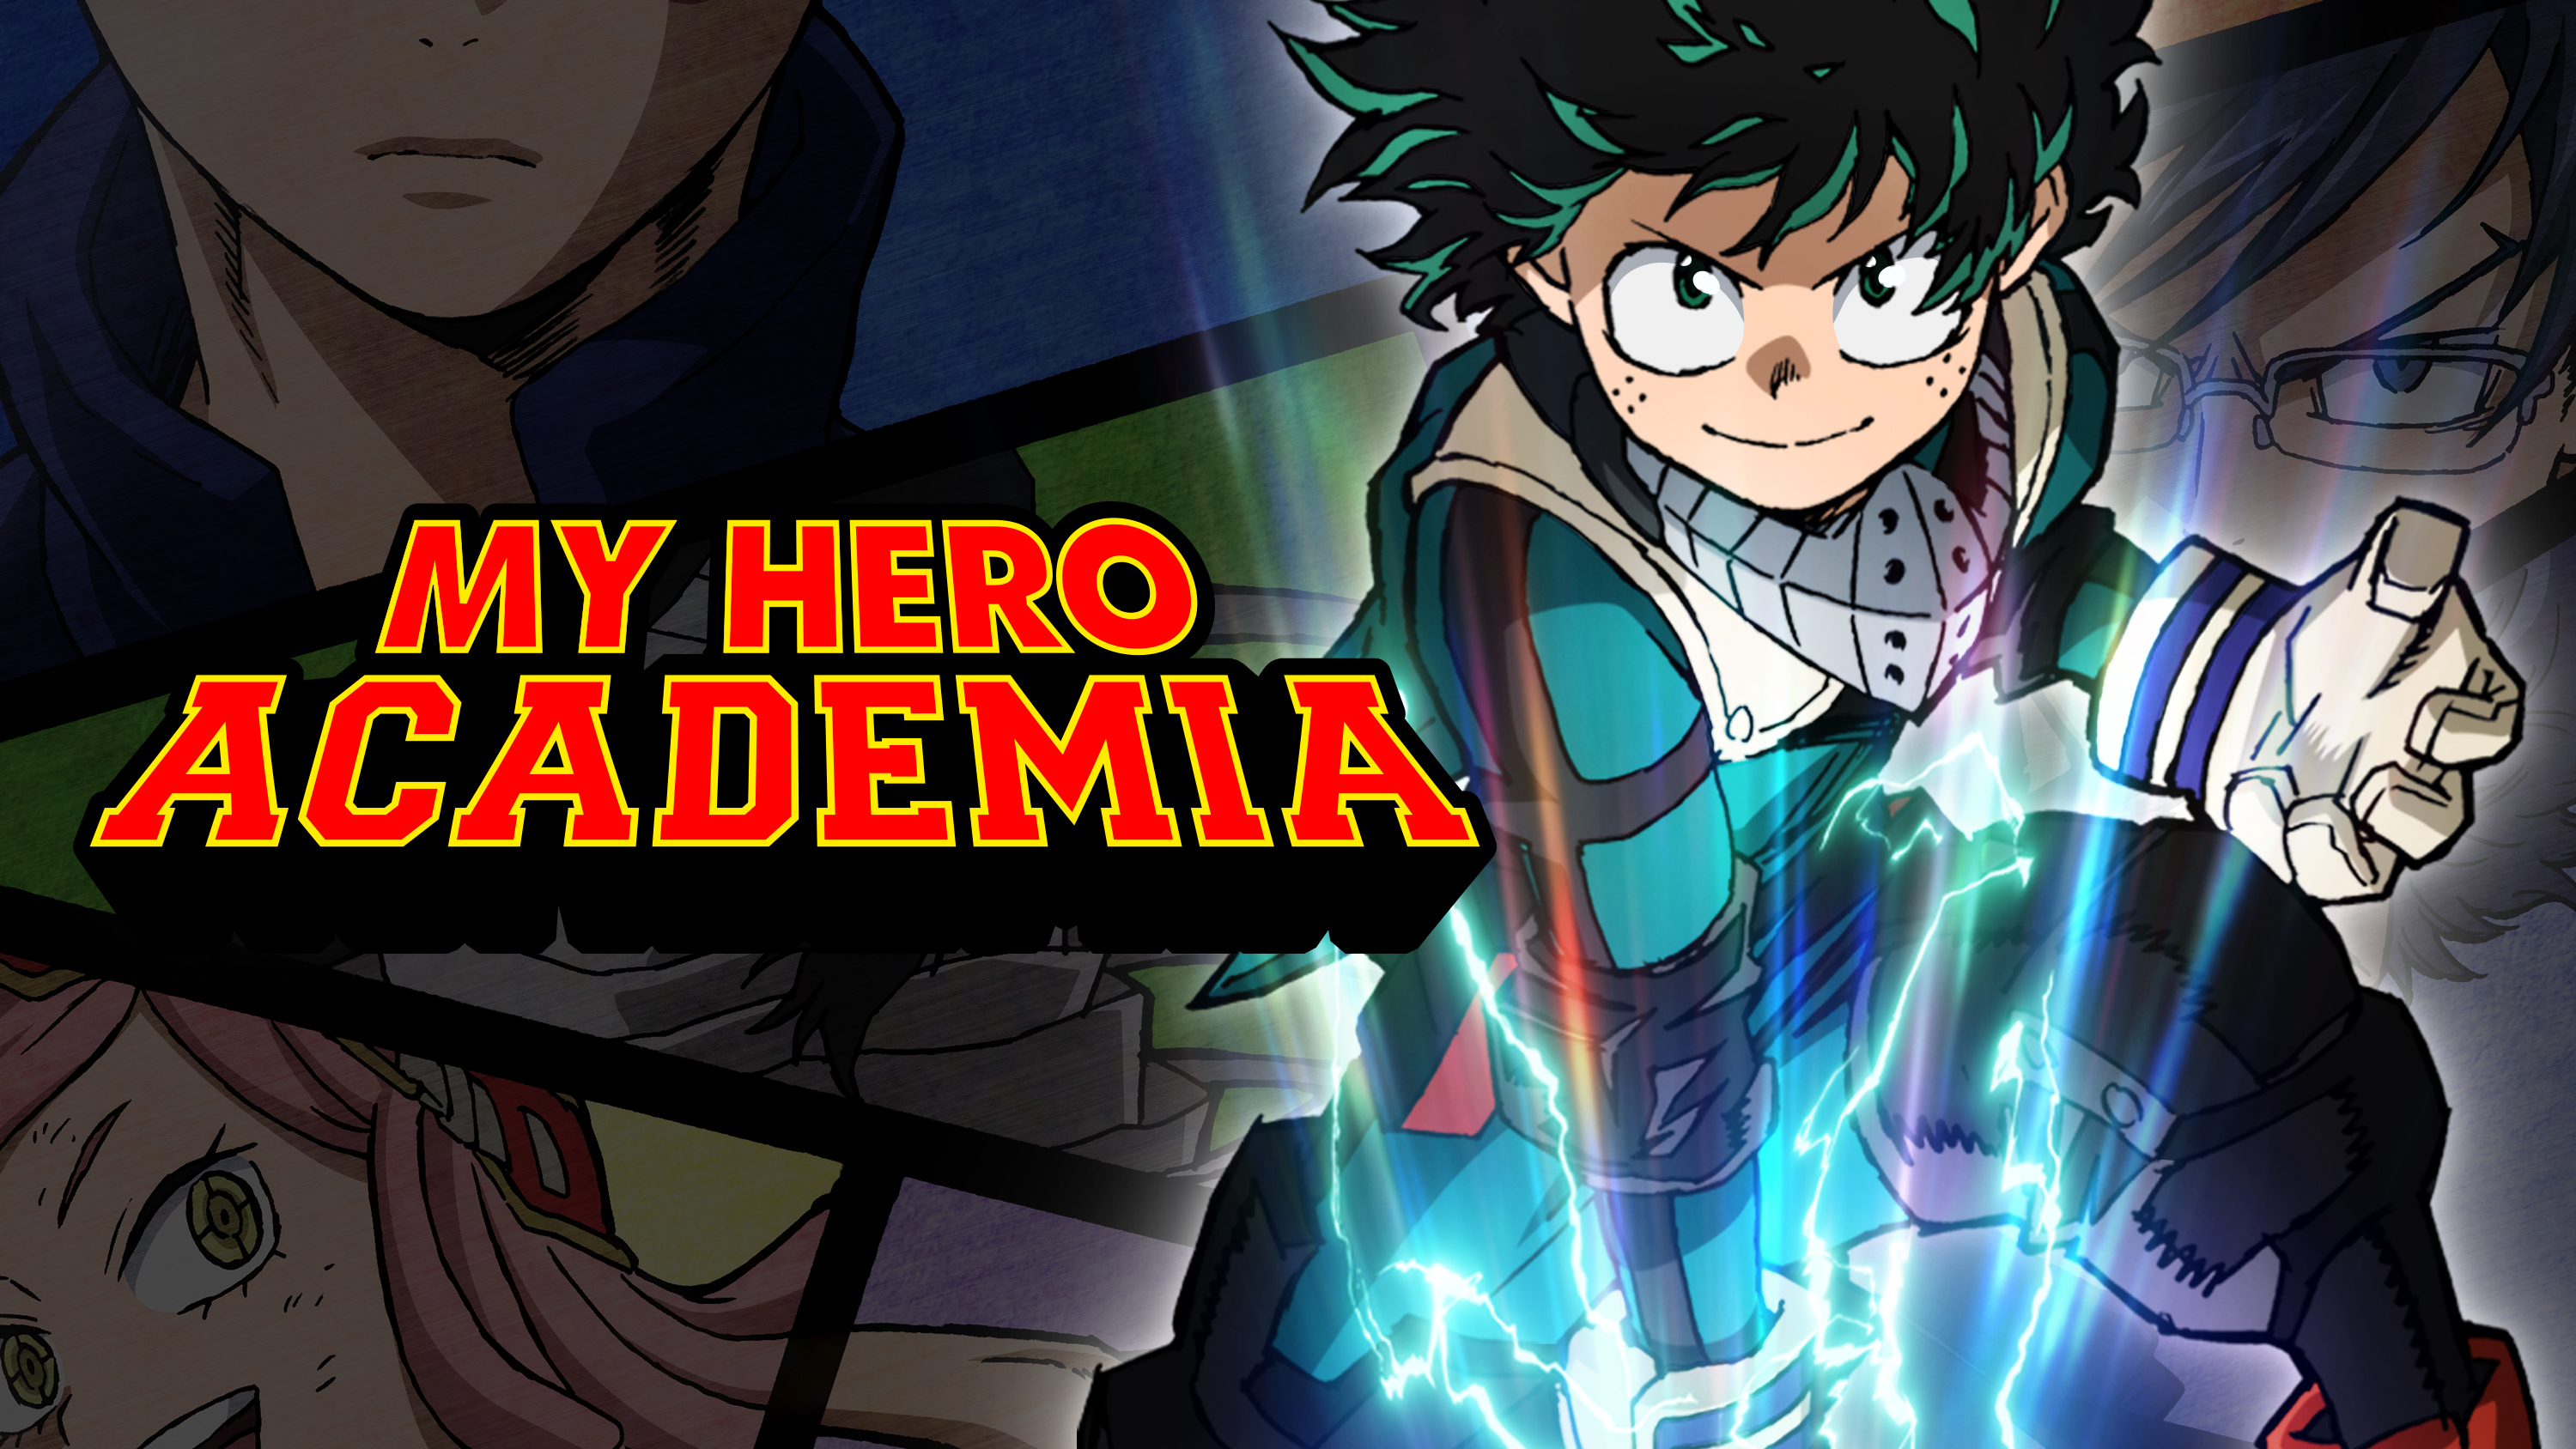 season 4 of My Hero Academia release date